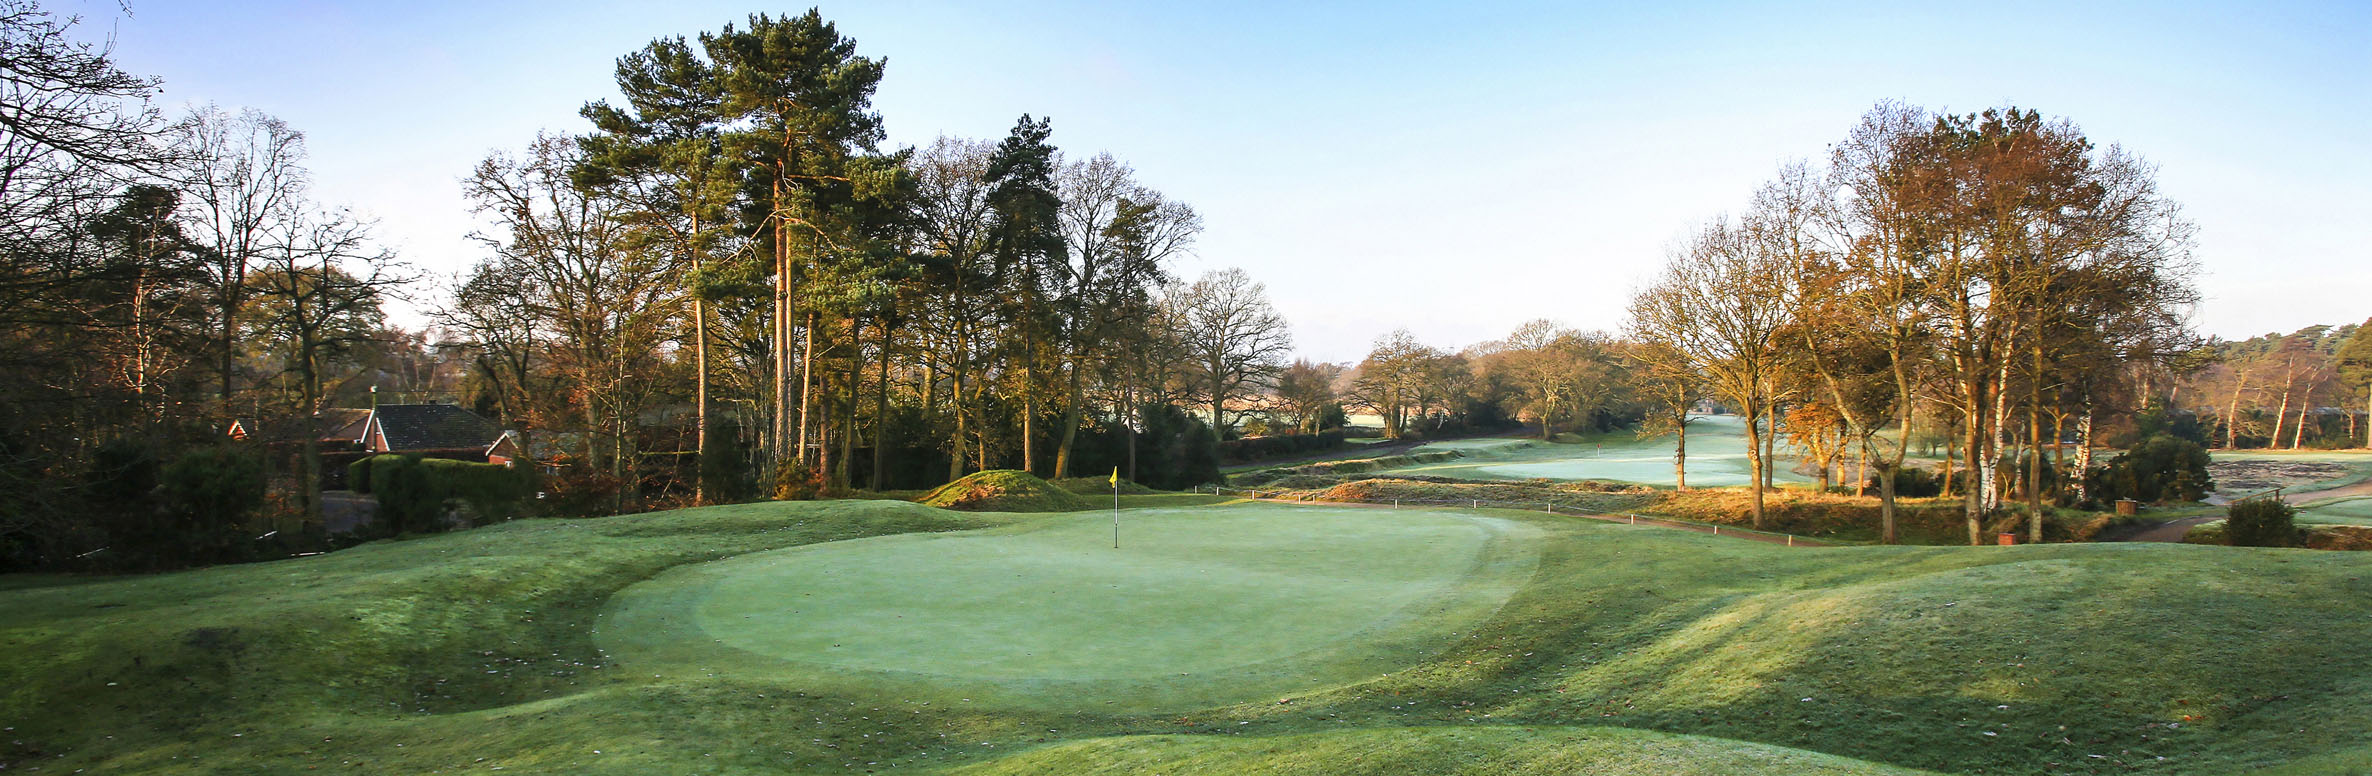 Golf Course Image - Blackmoor Golf Club No. 9